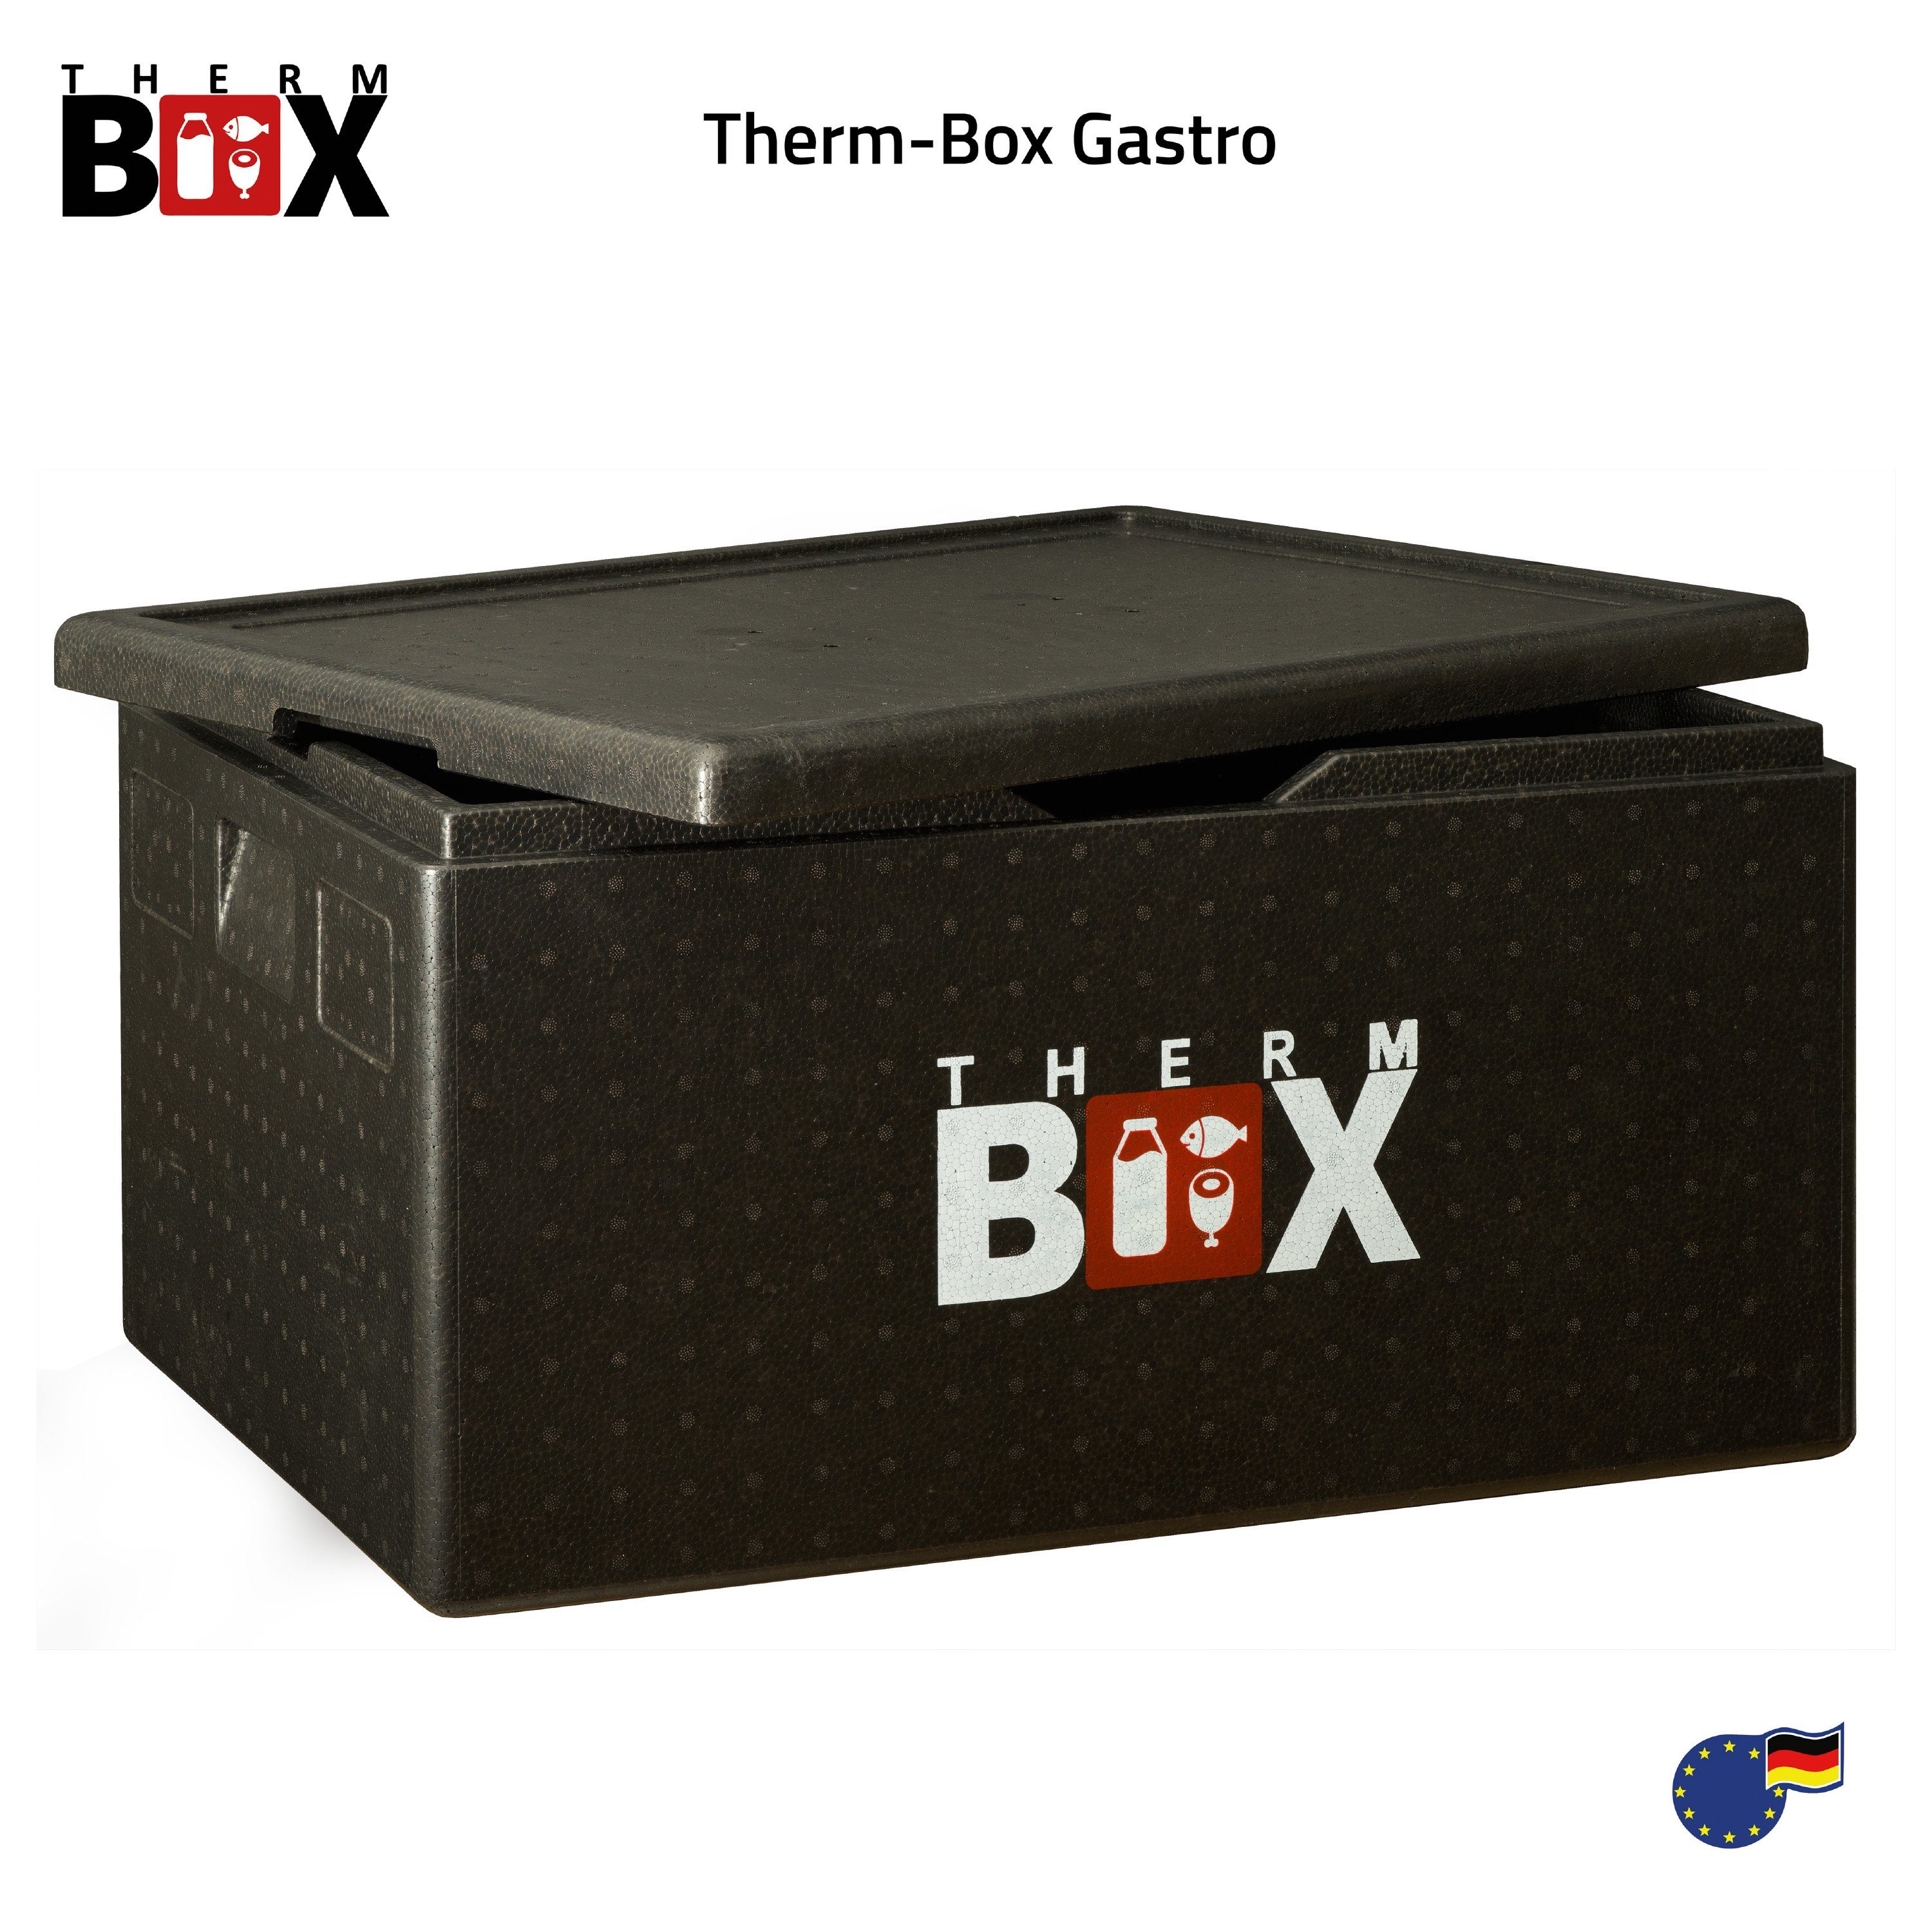 https://i.otto.de/i/otto/5b759496-0472-58e4-b6d7-f0e50cd2eb2f/therm-box-thermobehaelter-styroporbox-b80-innen-62-5x42-5x32cm-wiederverwendbar-styropor-piocelan-1-1-tlg-1-box-fuer-e3-kiste-thermobox-warmhaltebox-kuehlbox-profibox.jpg?$formatz$